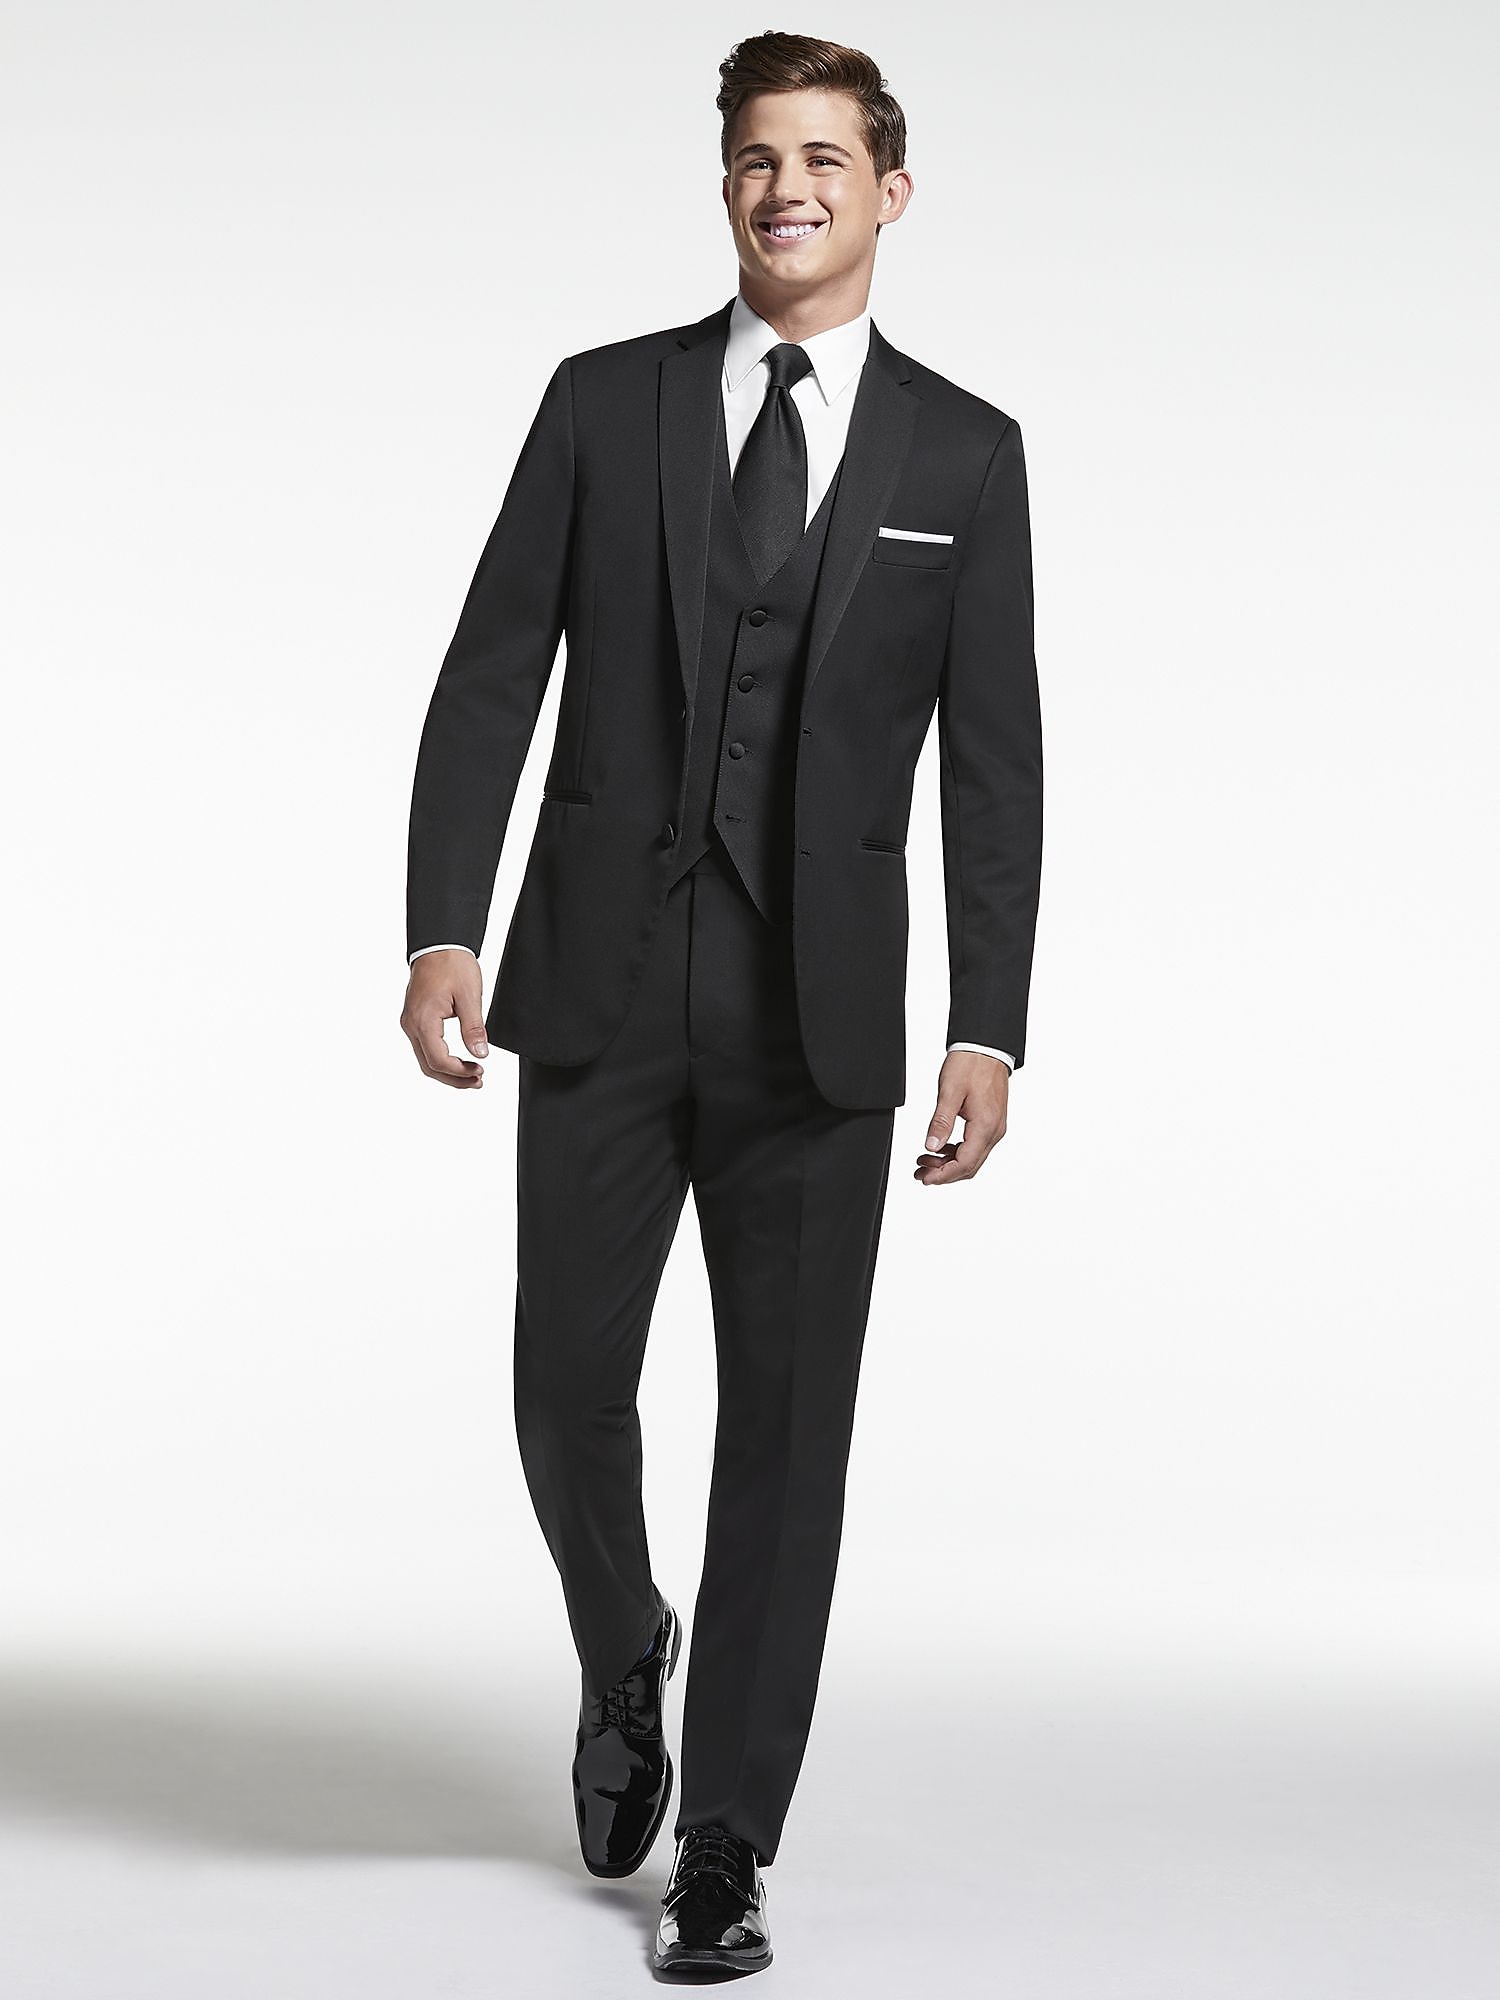 black tuxedo | black by vera wang tuxedo | tuxedo rental | men's